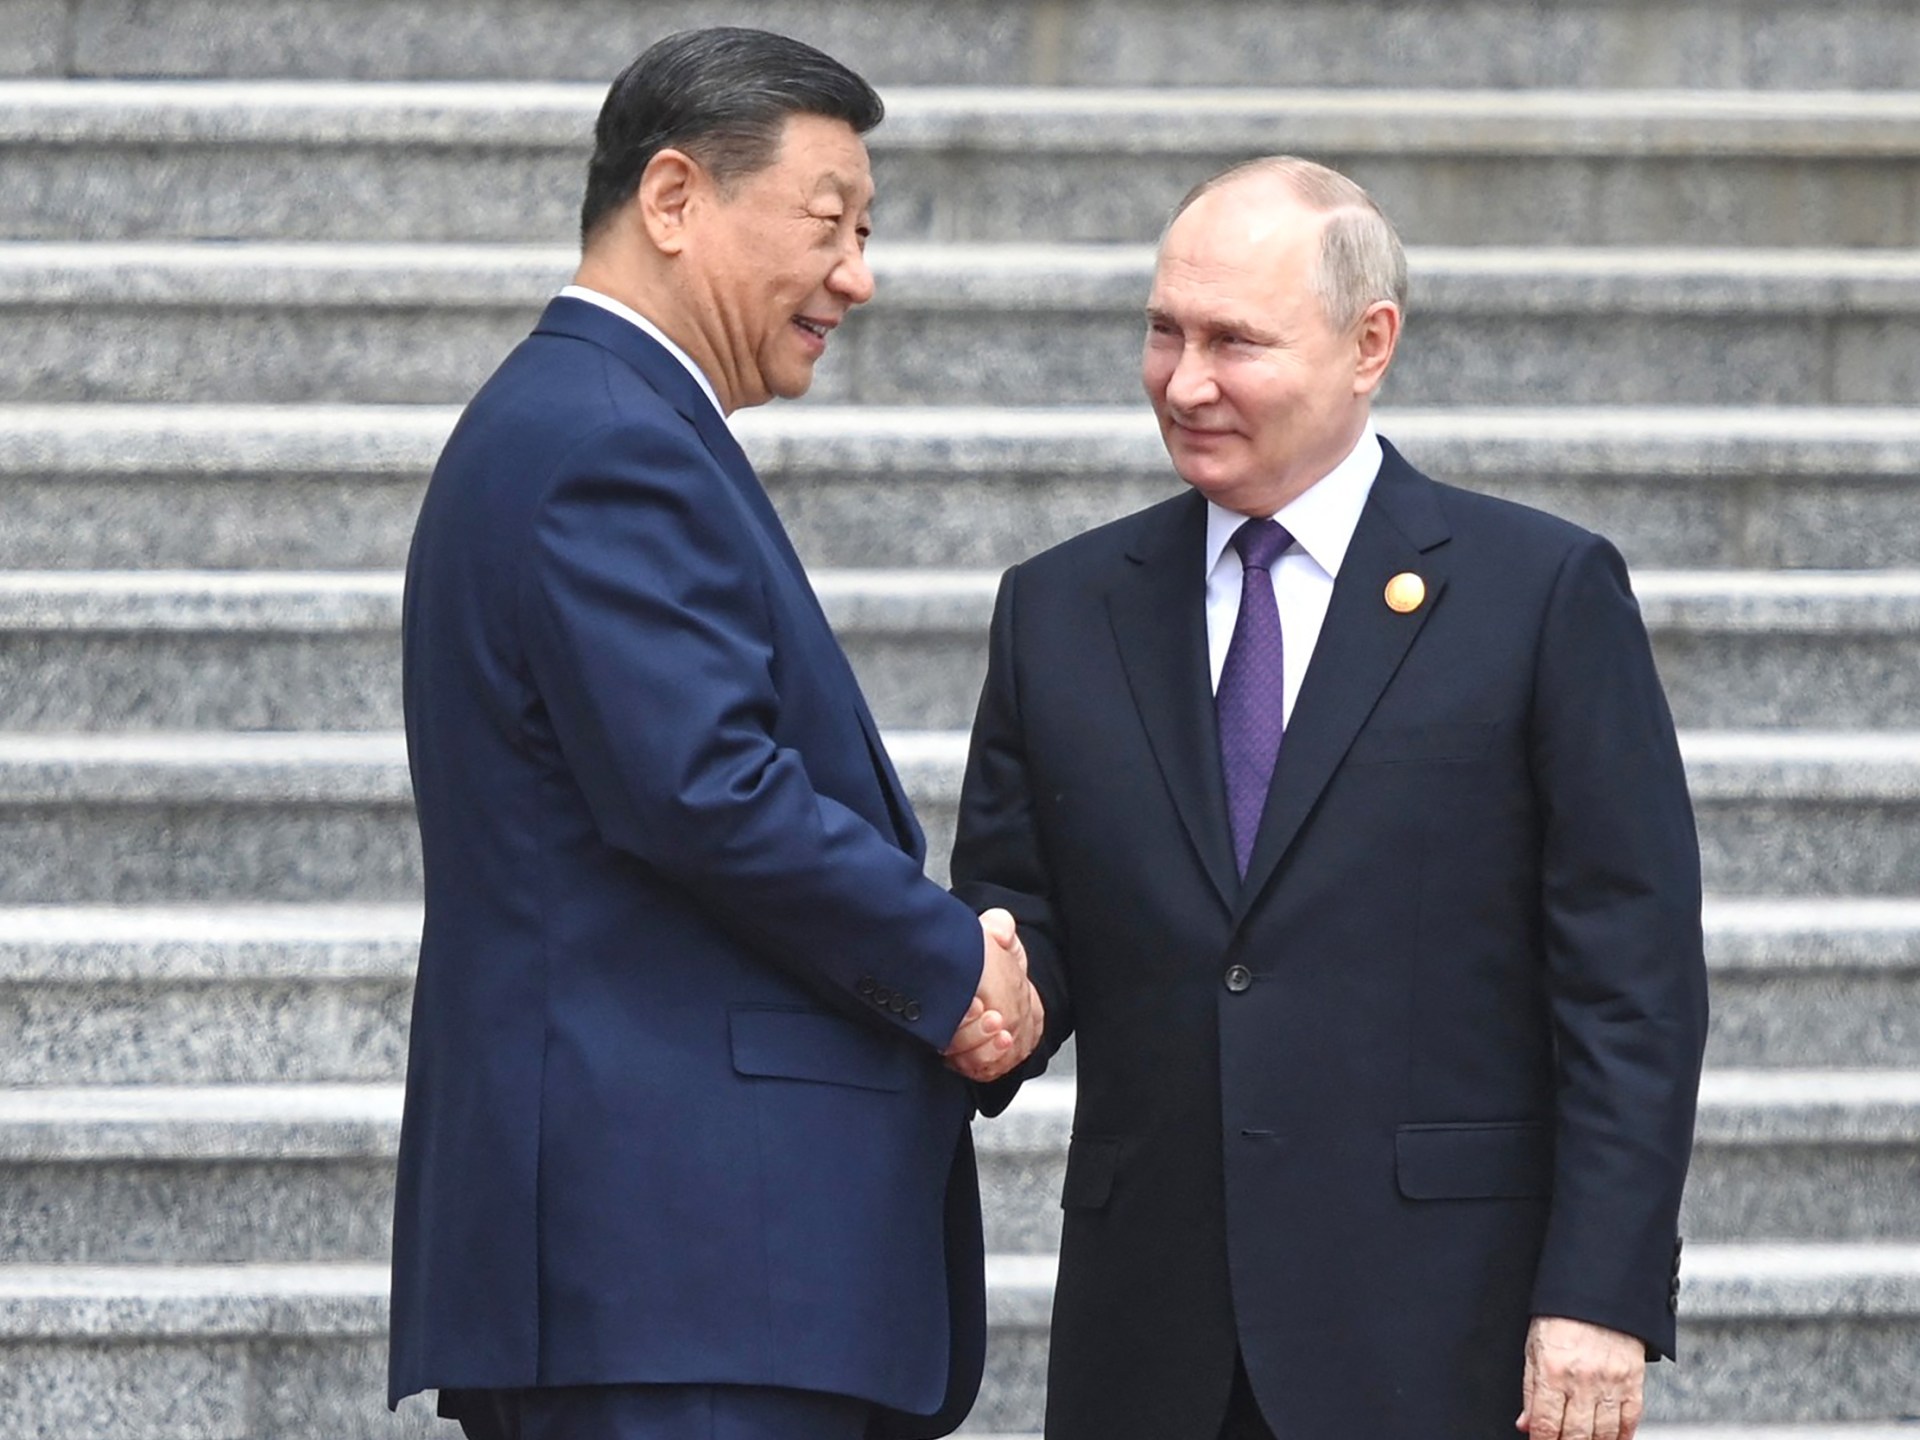 Old friend Putin and Chinas Xi strengthen strategic ties at summit | Politics News [Video]